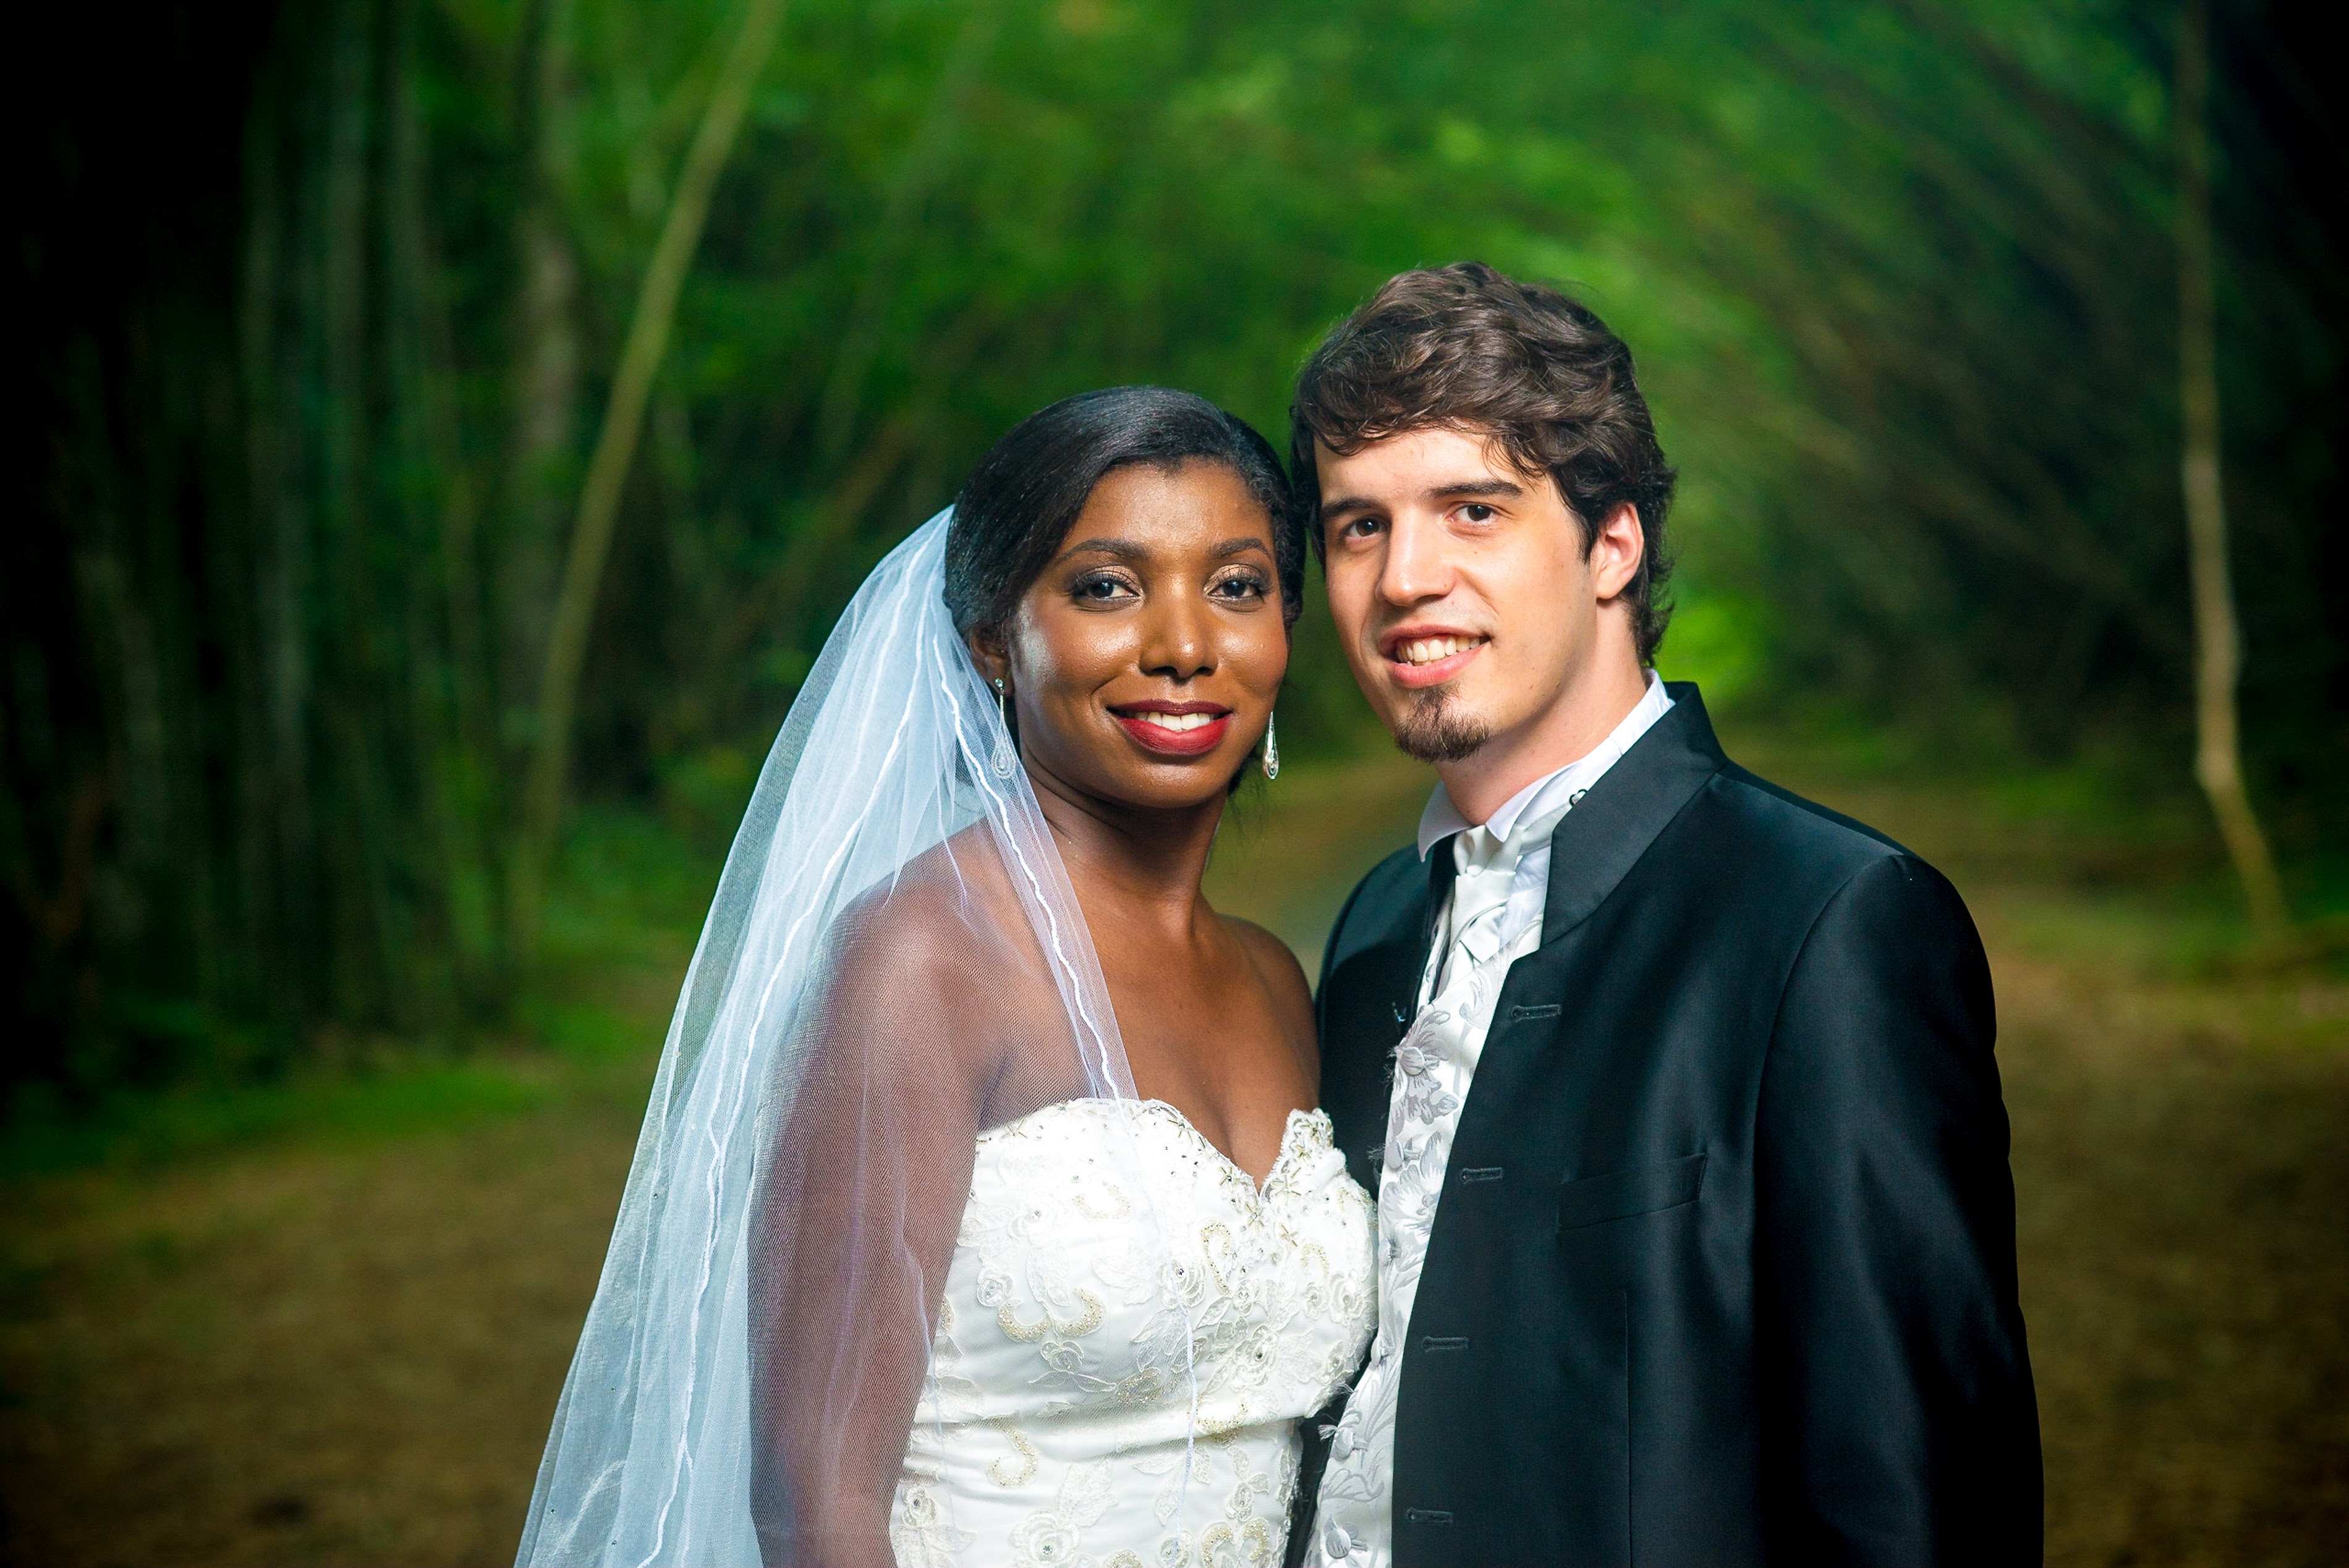 Nicolas Vansnick and Adalia Leander in wedding attire